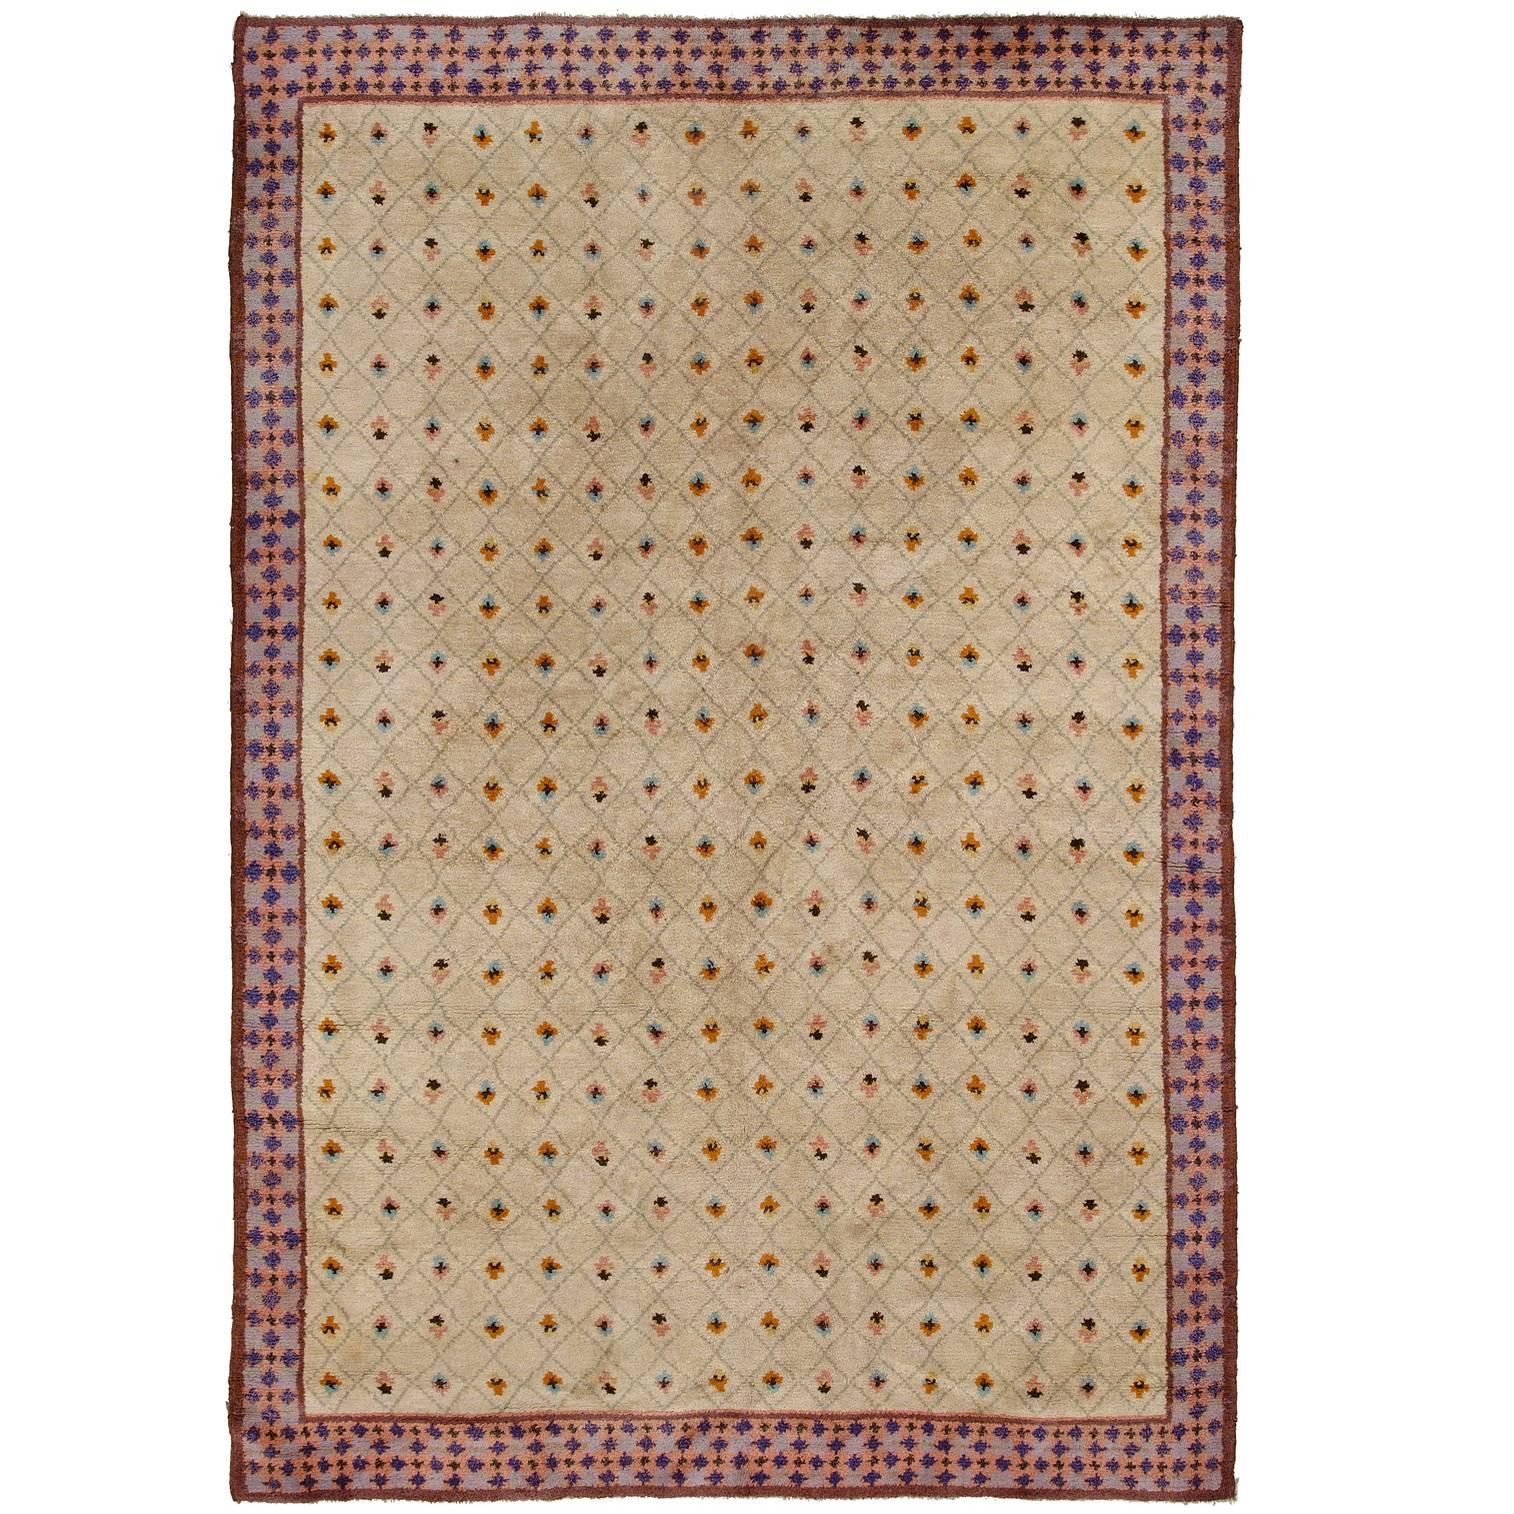 Mid 20th Century Swedish Pile-Weave Carpet by Konst Fluten For Sale